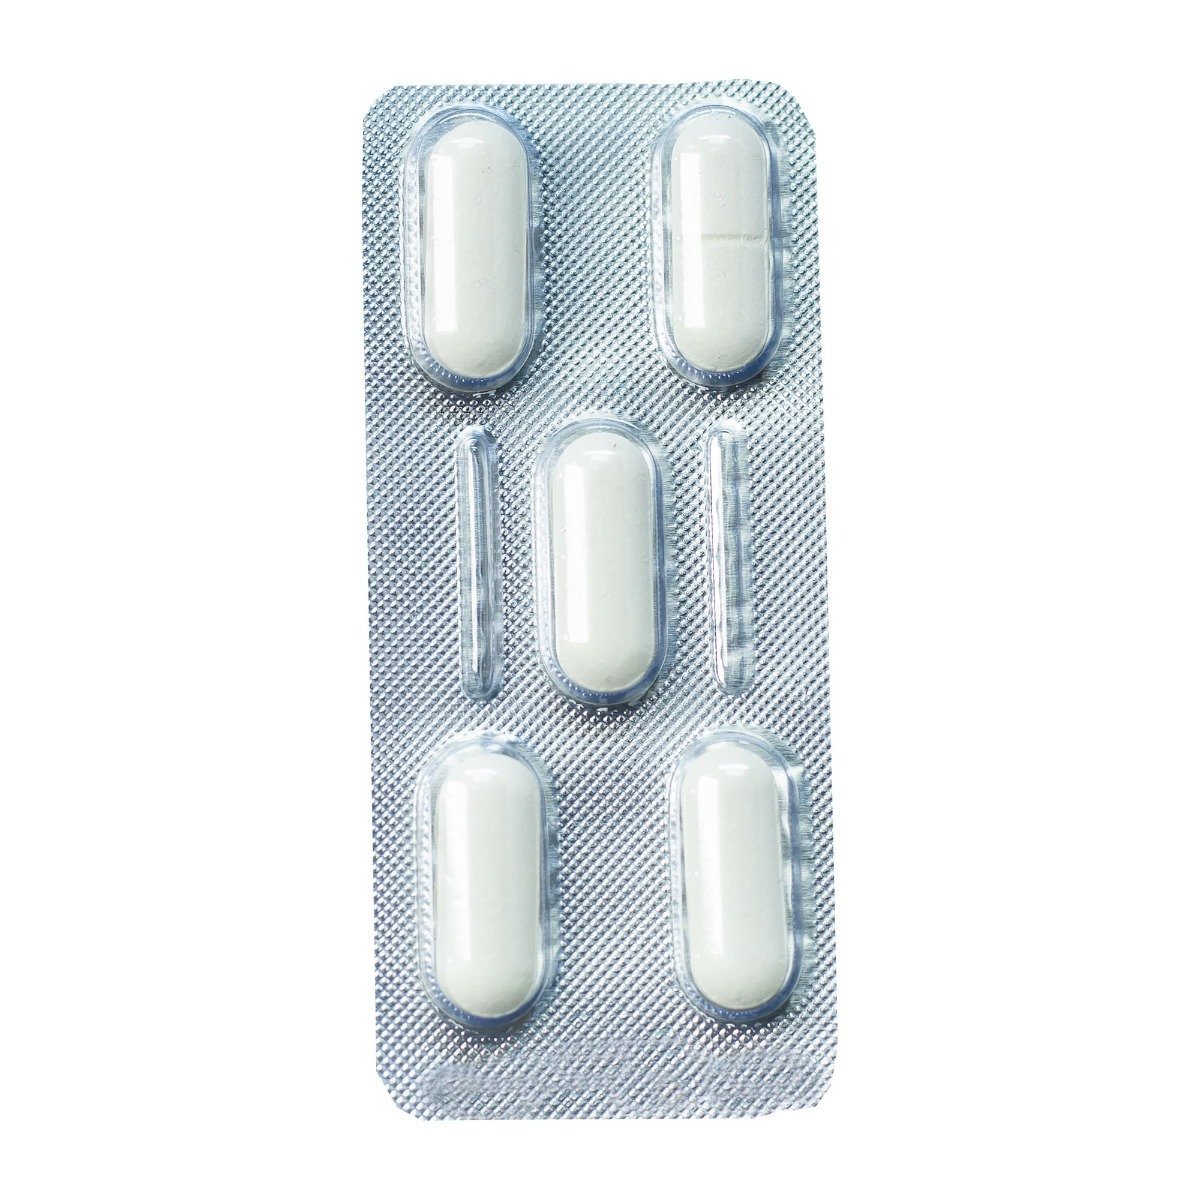 Tavacin 750 mg - 5 Tablets - Bloom Pharmacy